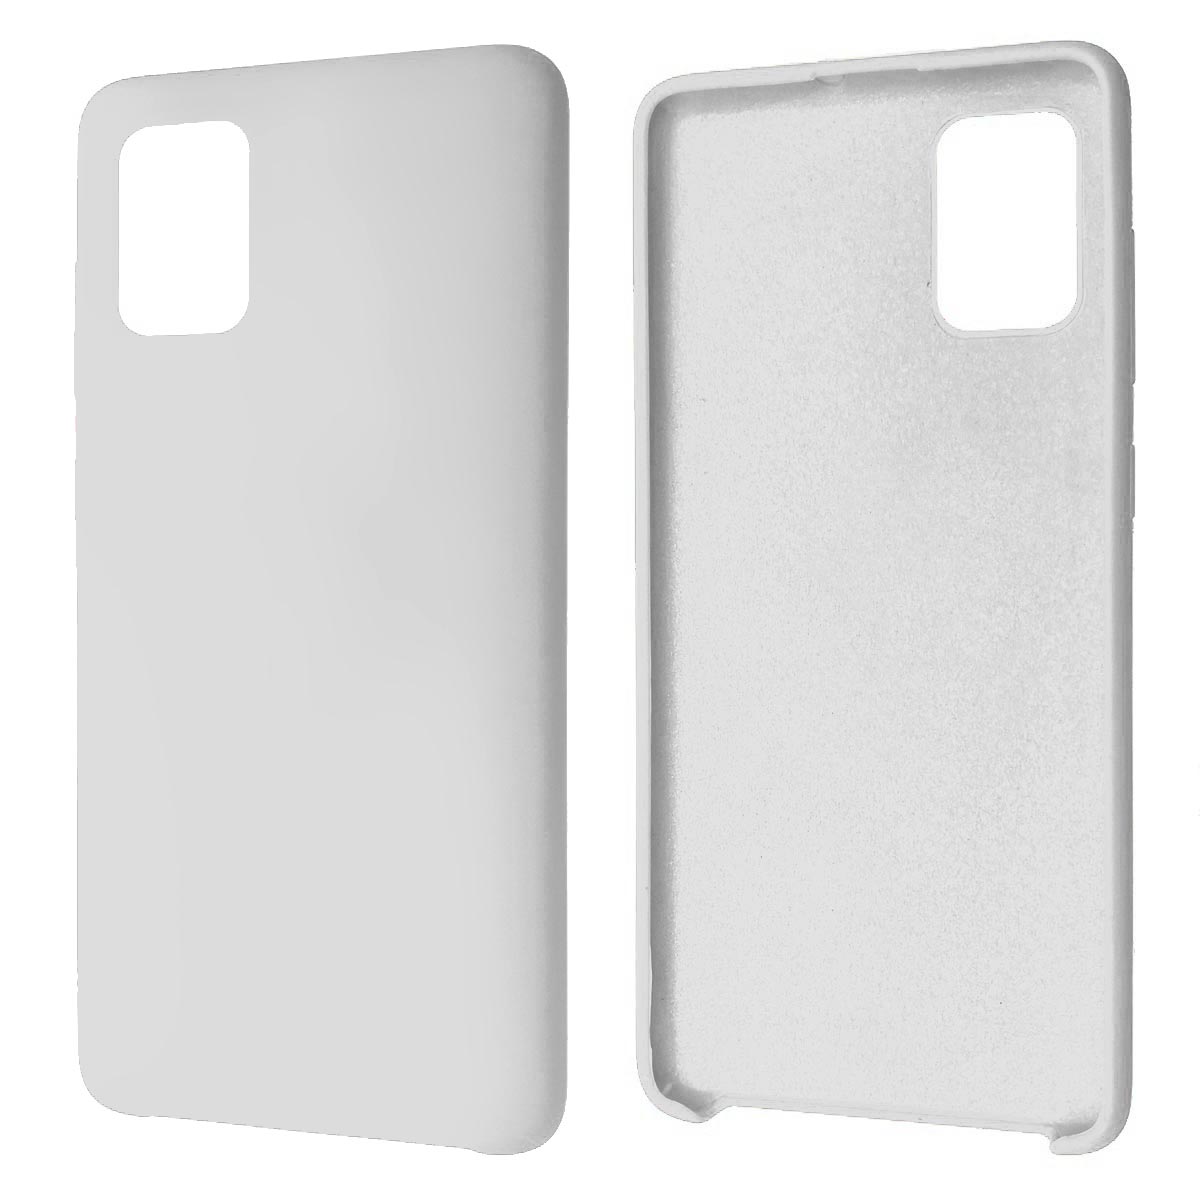 Чехол накладка Silicon Cover для SAMSUNG Galaxy A71 (SM-A715), силикон, бархат, цвет белый